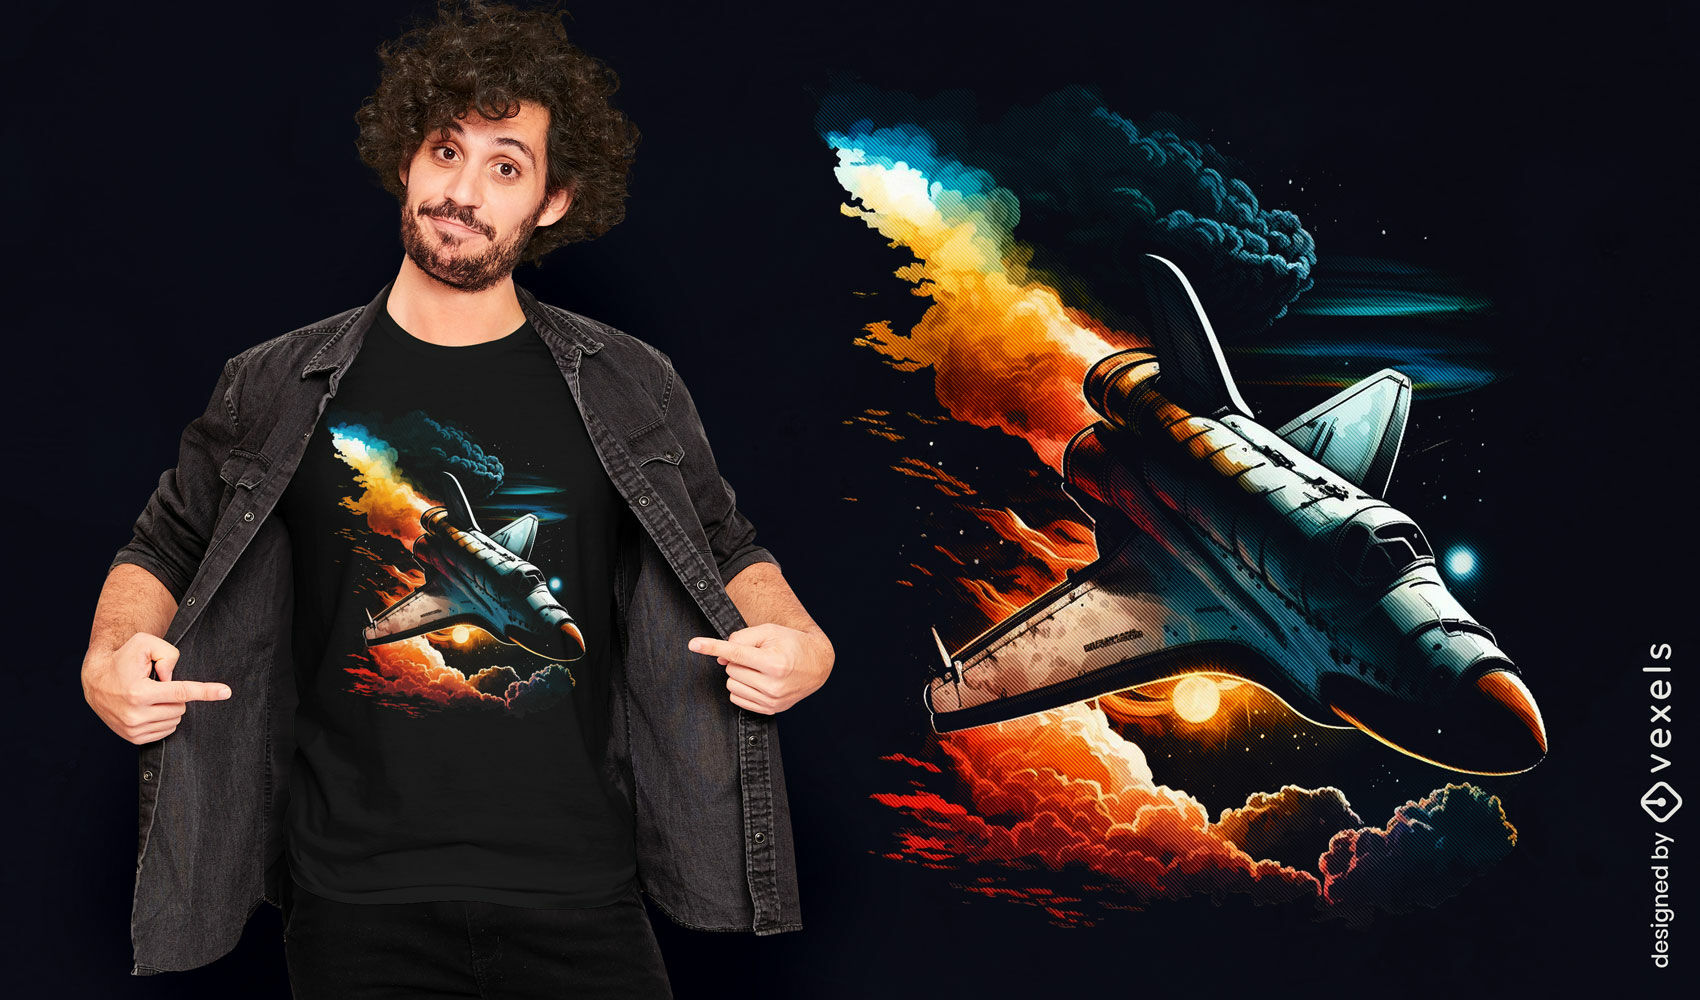 Space shuttle launch t-shirt design